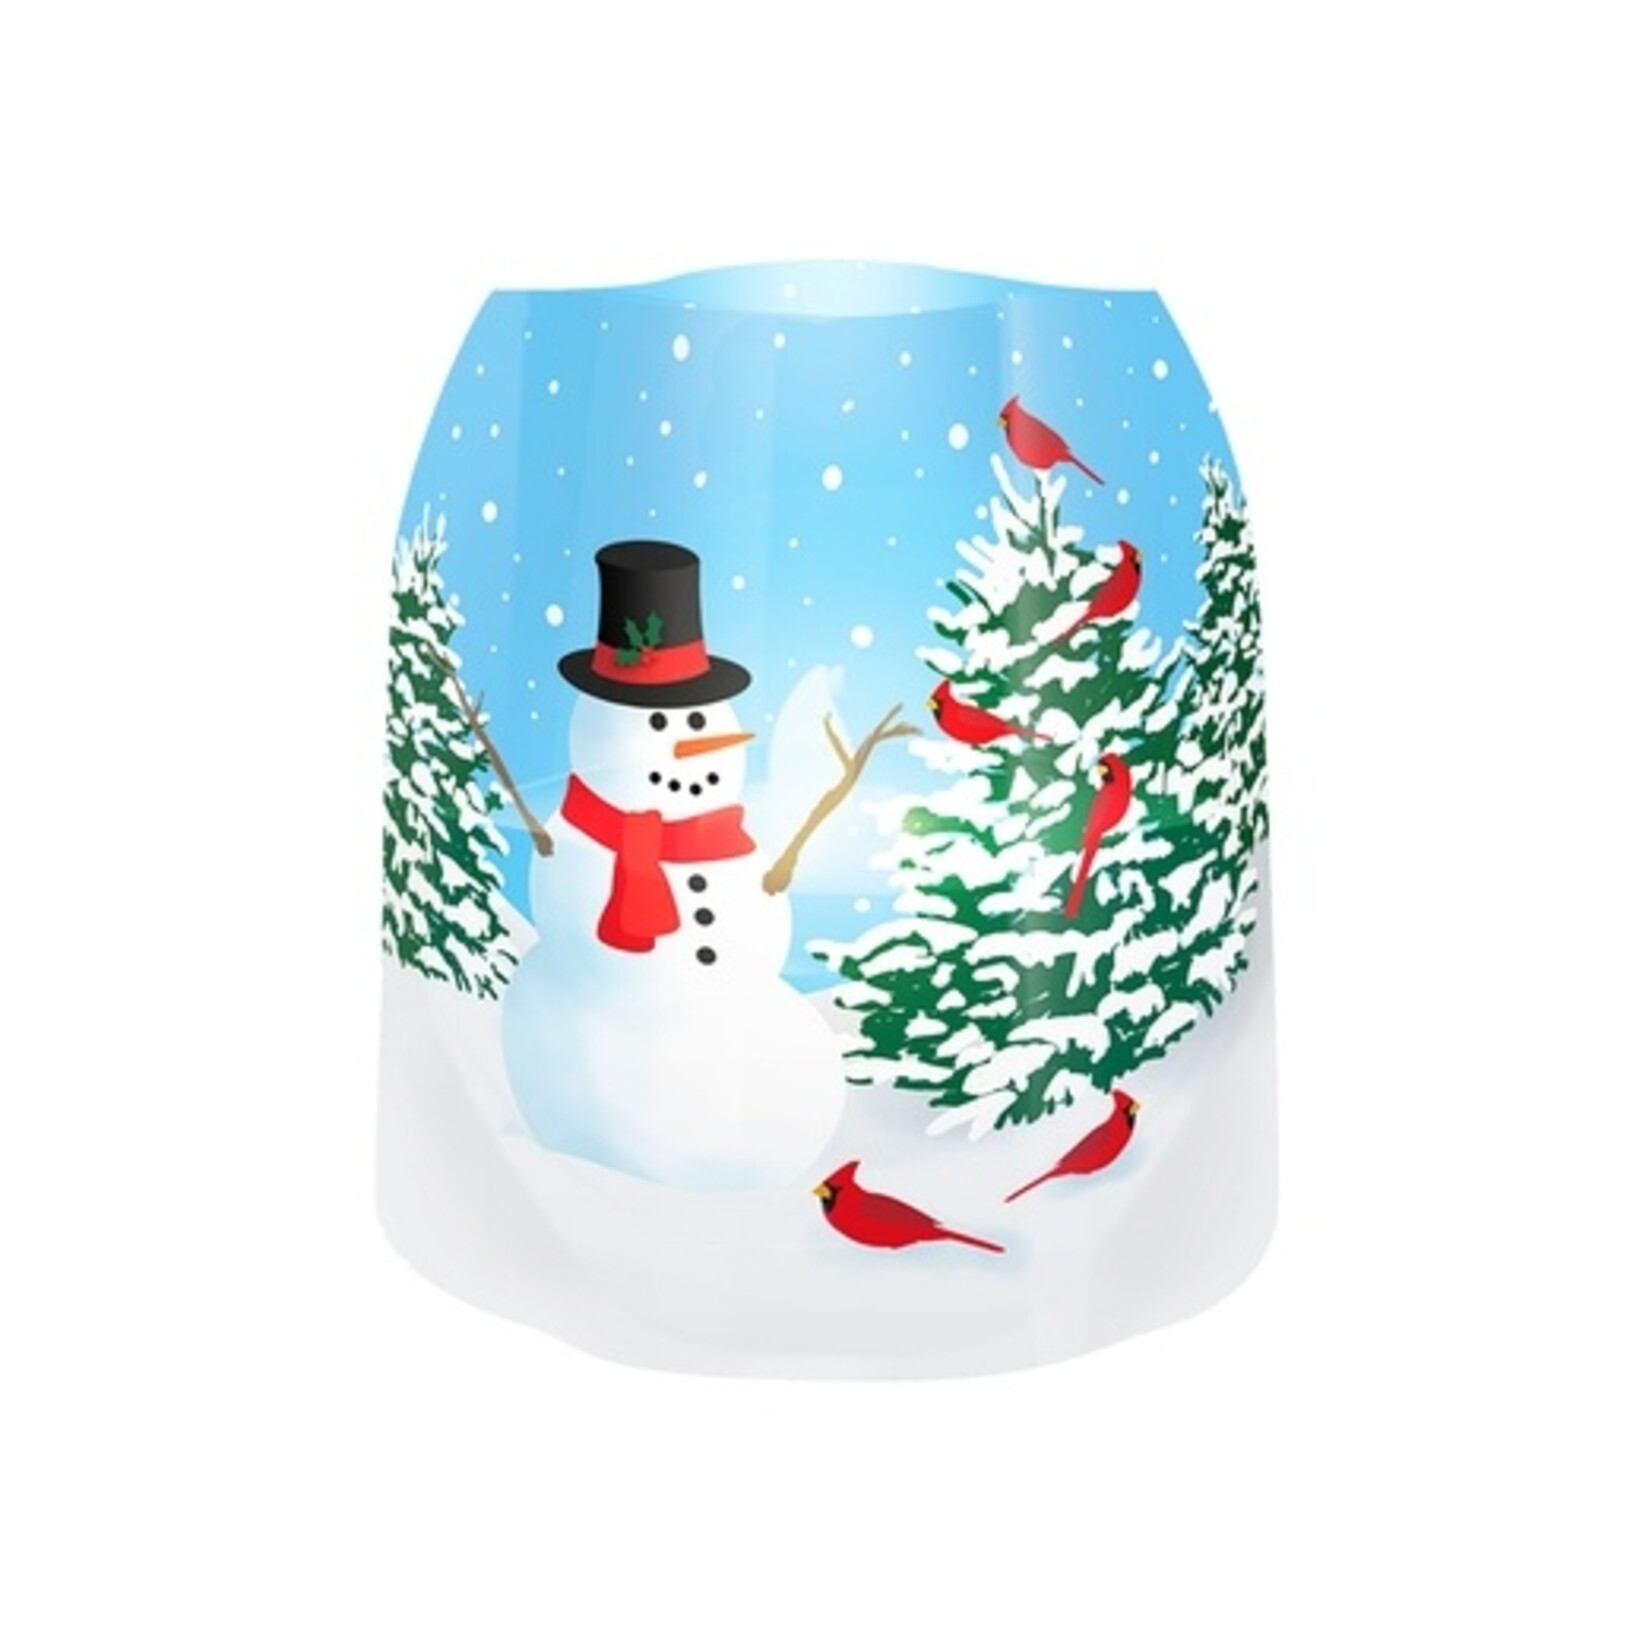 Modgy Holiday Snowman Modgy Lantern